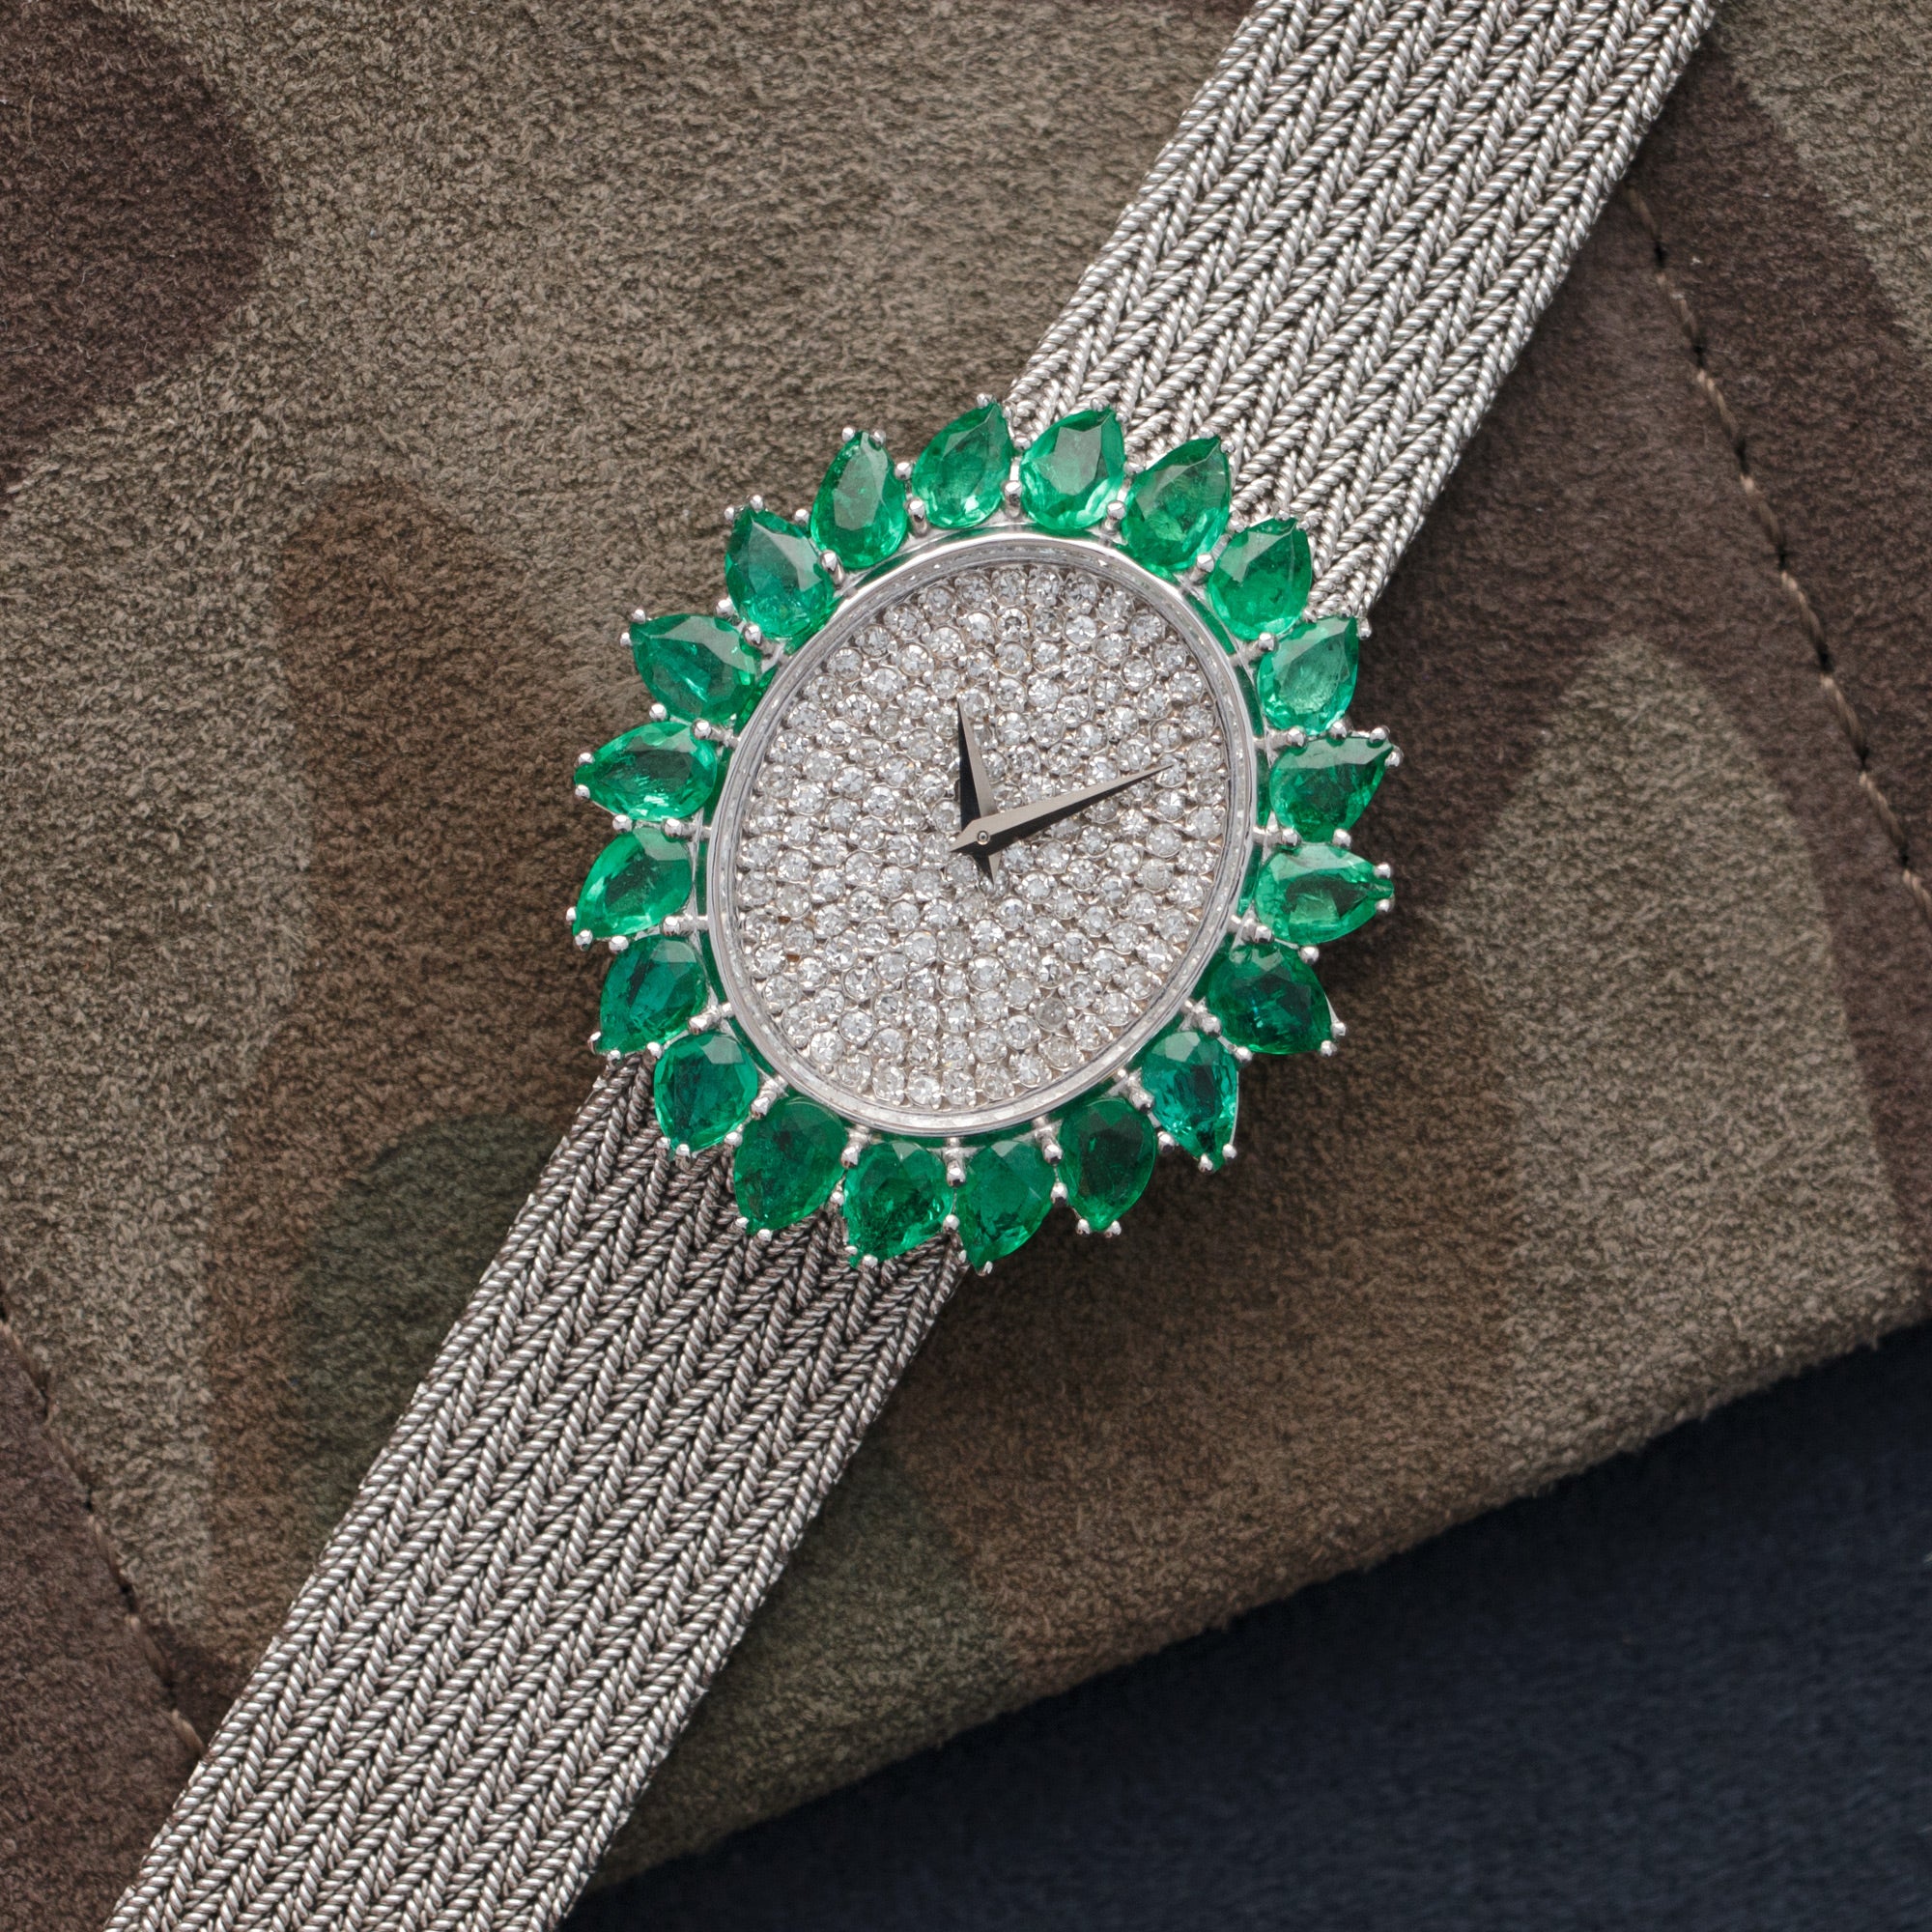 Vacheron Constantin - Vacheron Constantin White Gold Diamond &amp; Emerald Watch - The Keystone Watches